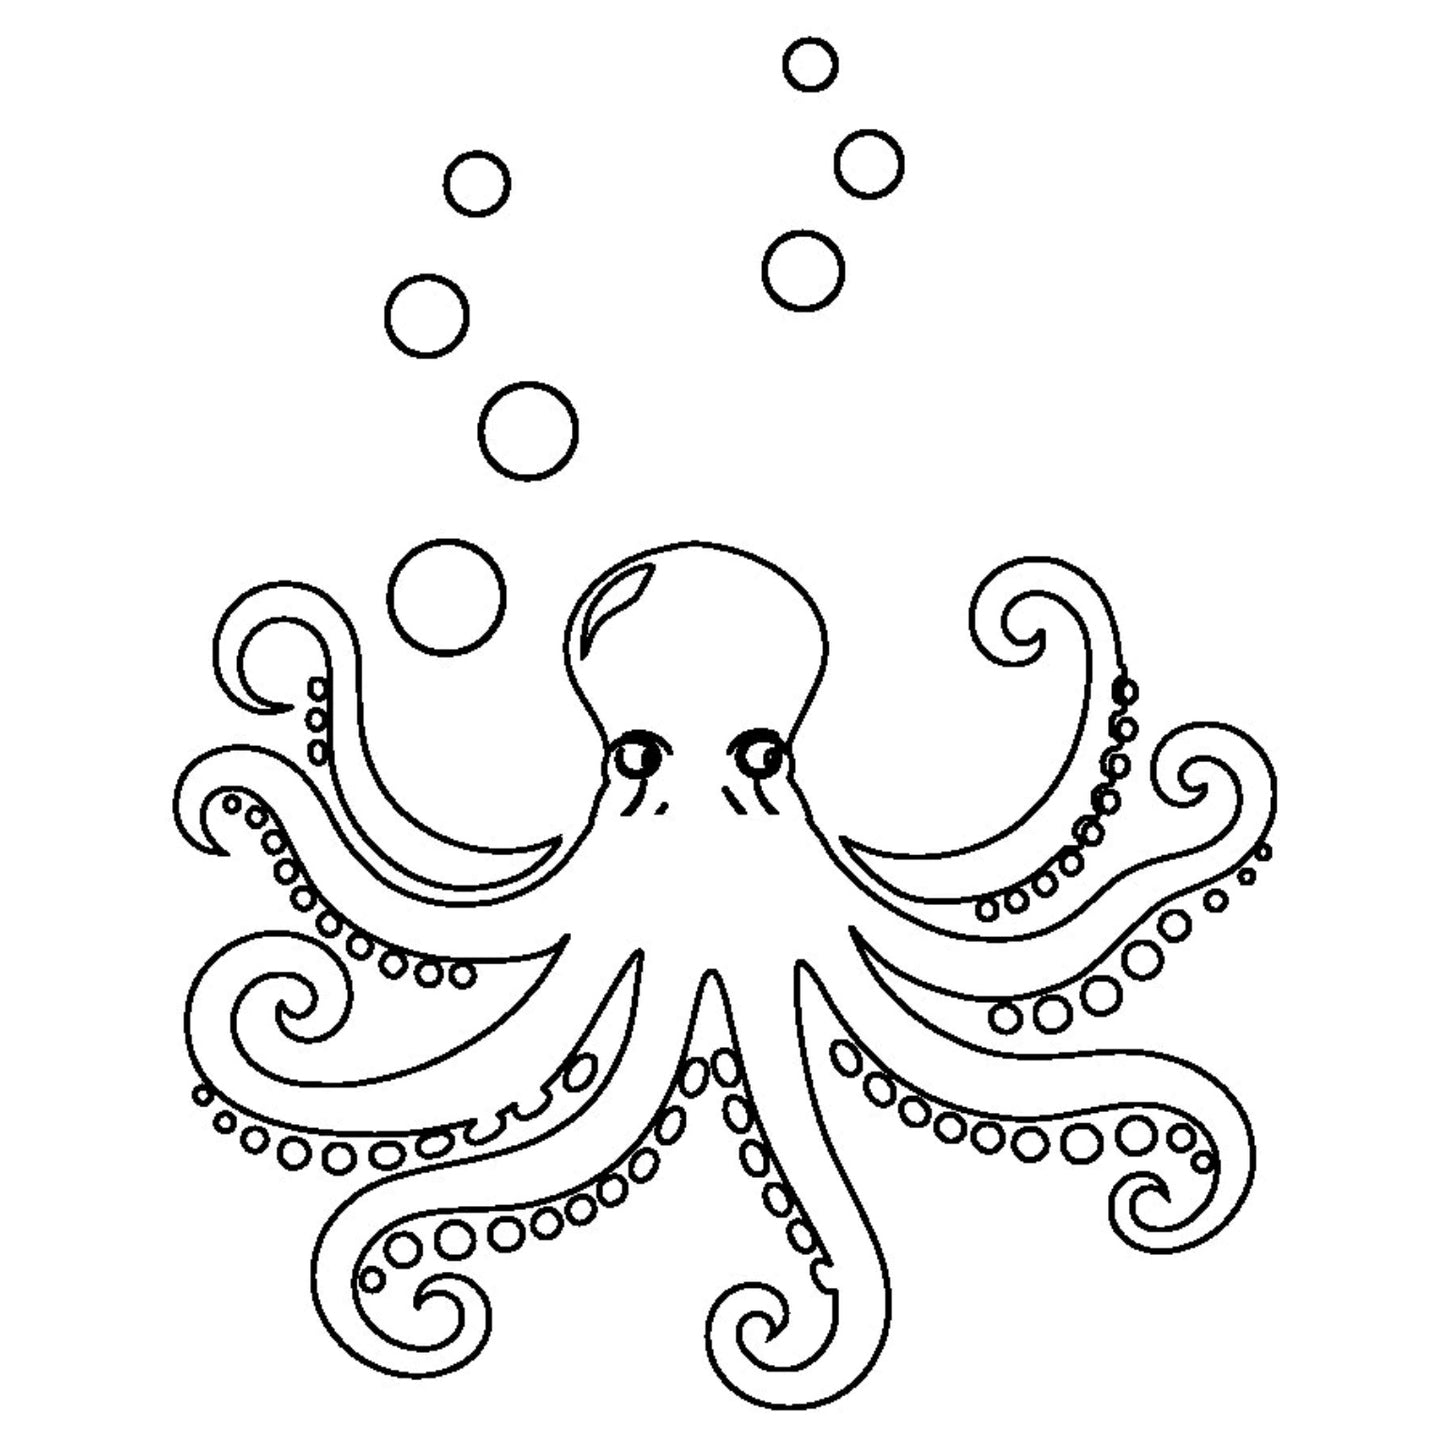 Octopus baseball hat burning design